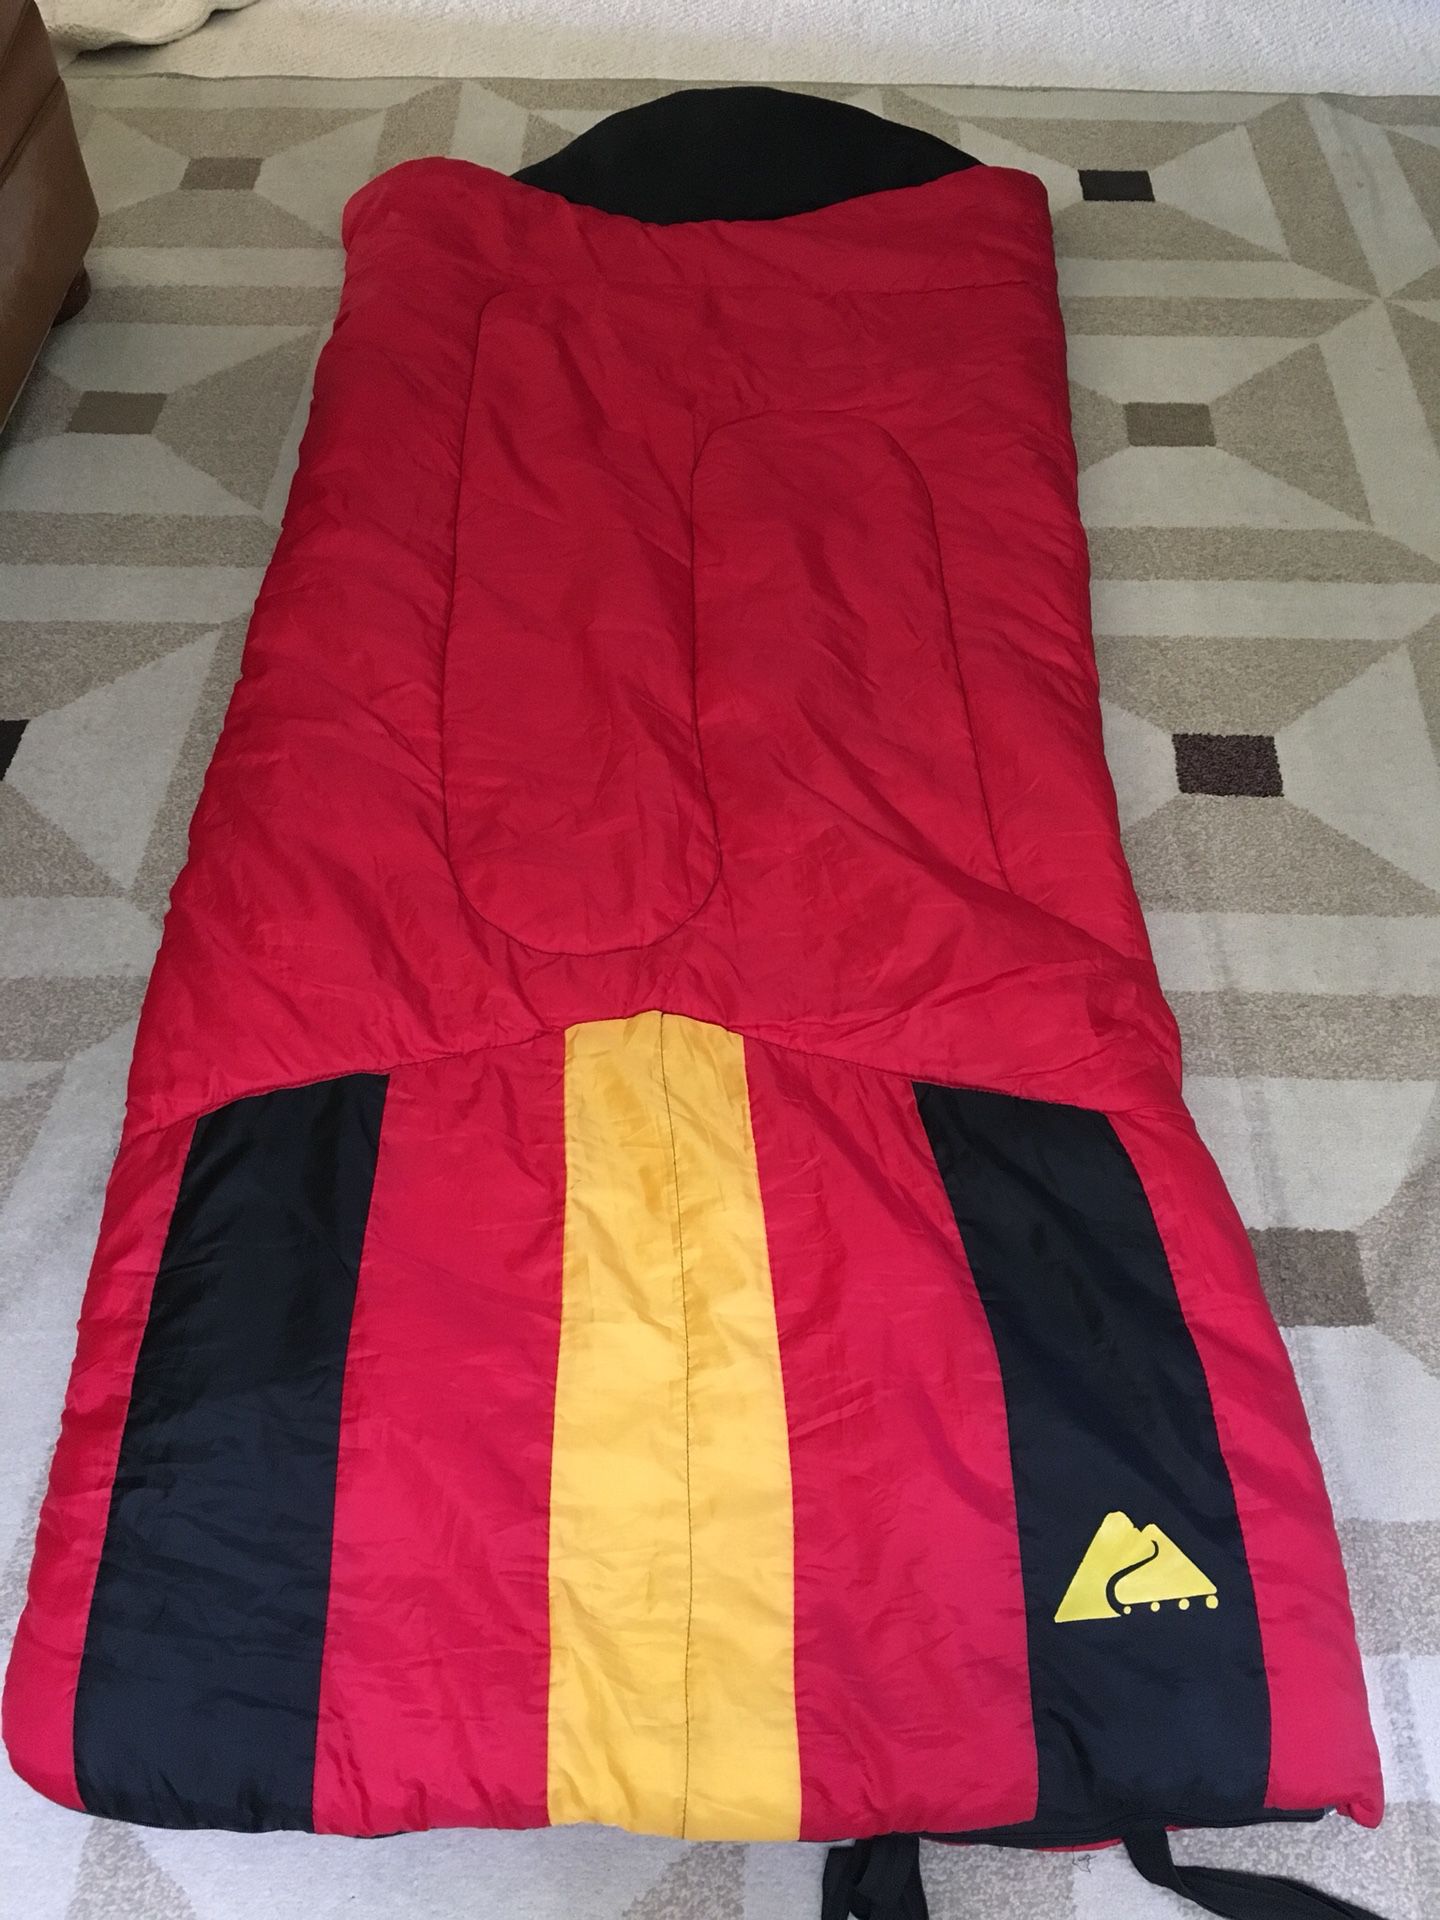 Full size sleeping bag- nylon- $20